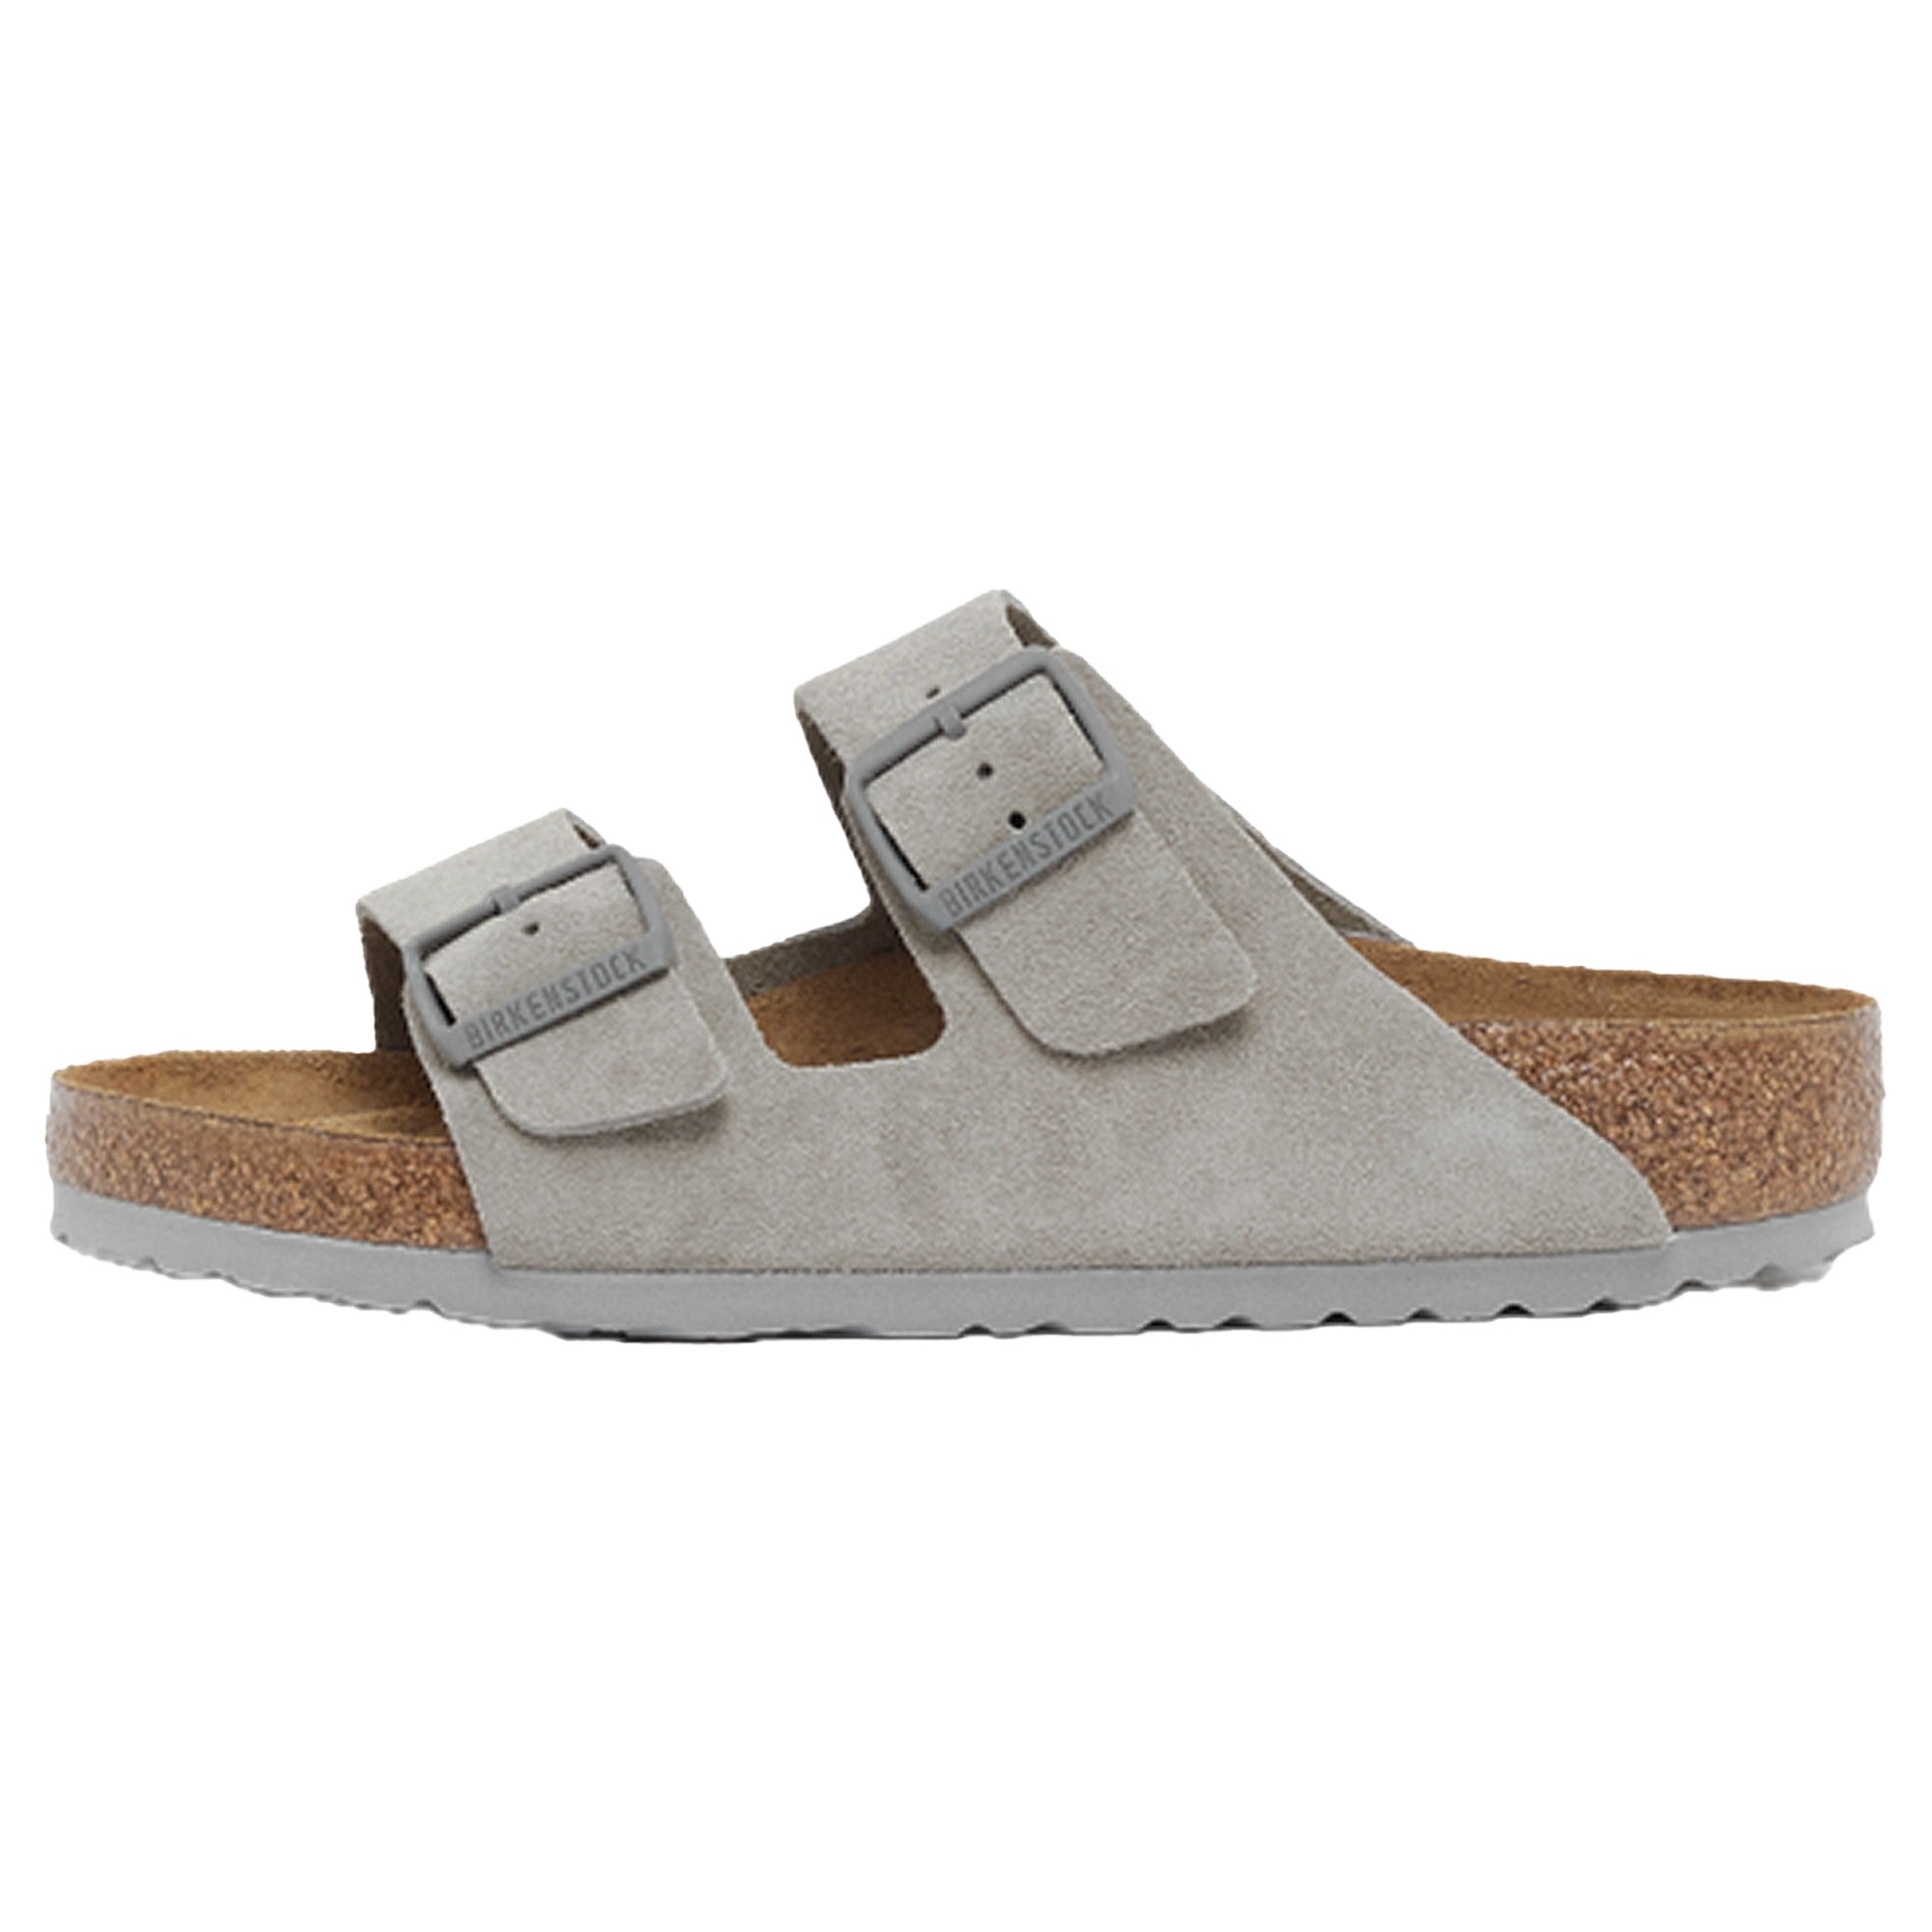 Birkenstock Arizona Suede Leather Sandals Slides Stone Latte Cream Mules Shoes